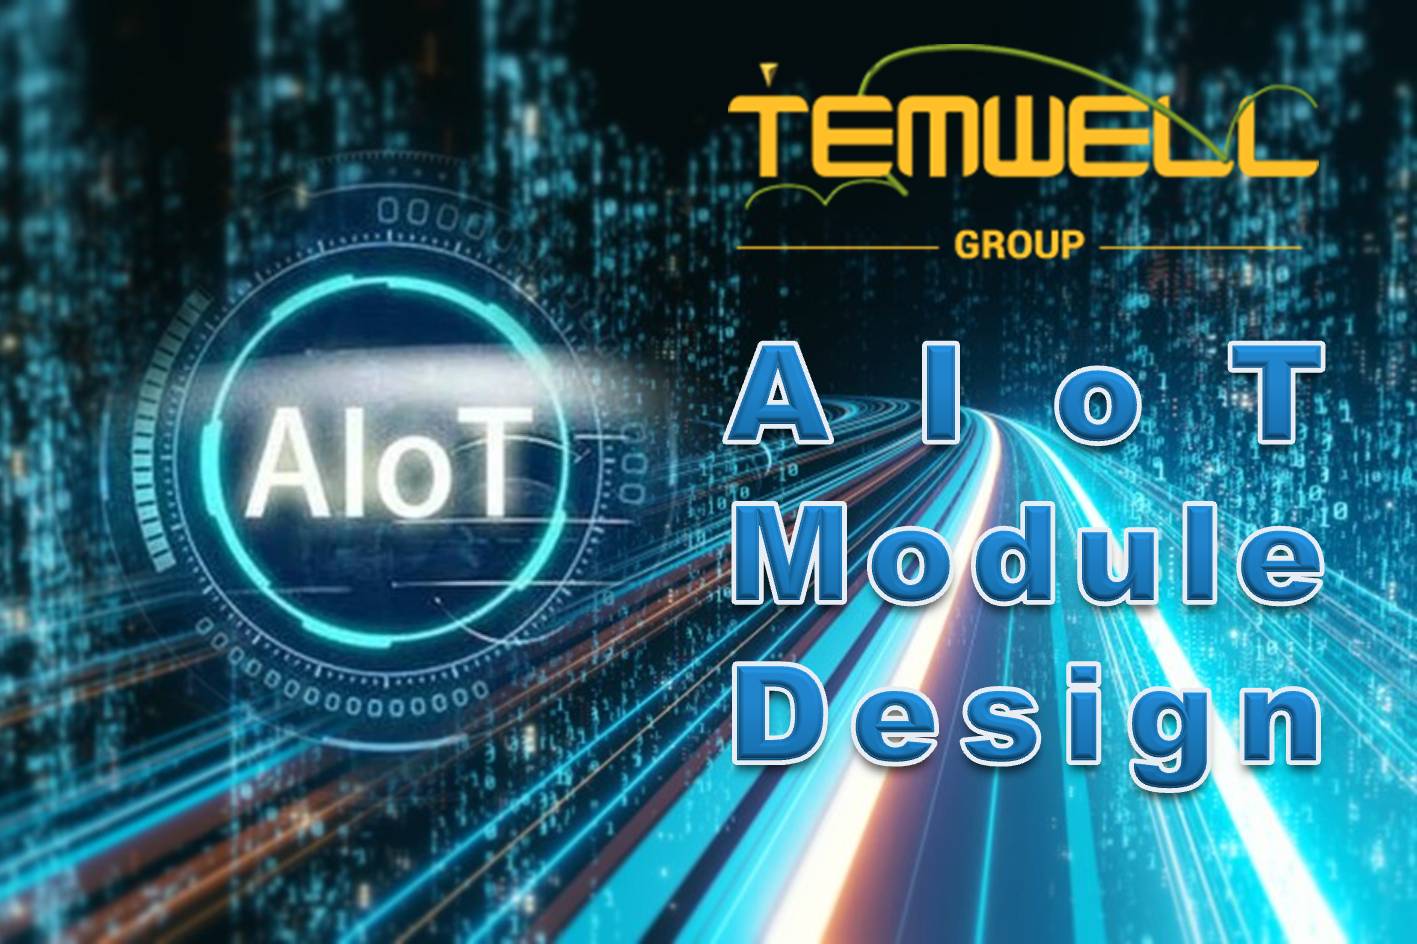 proimages/featured/alot-module-design/alot-module-design01.jpg